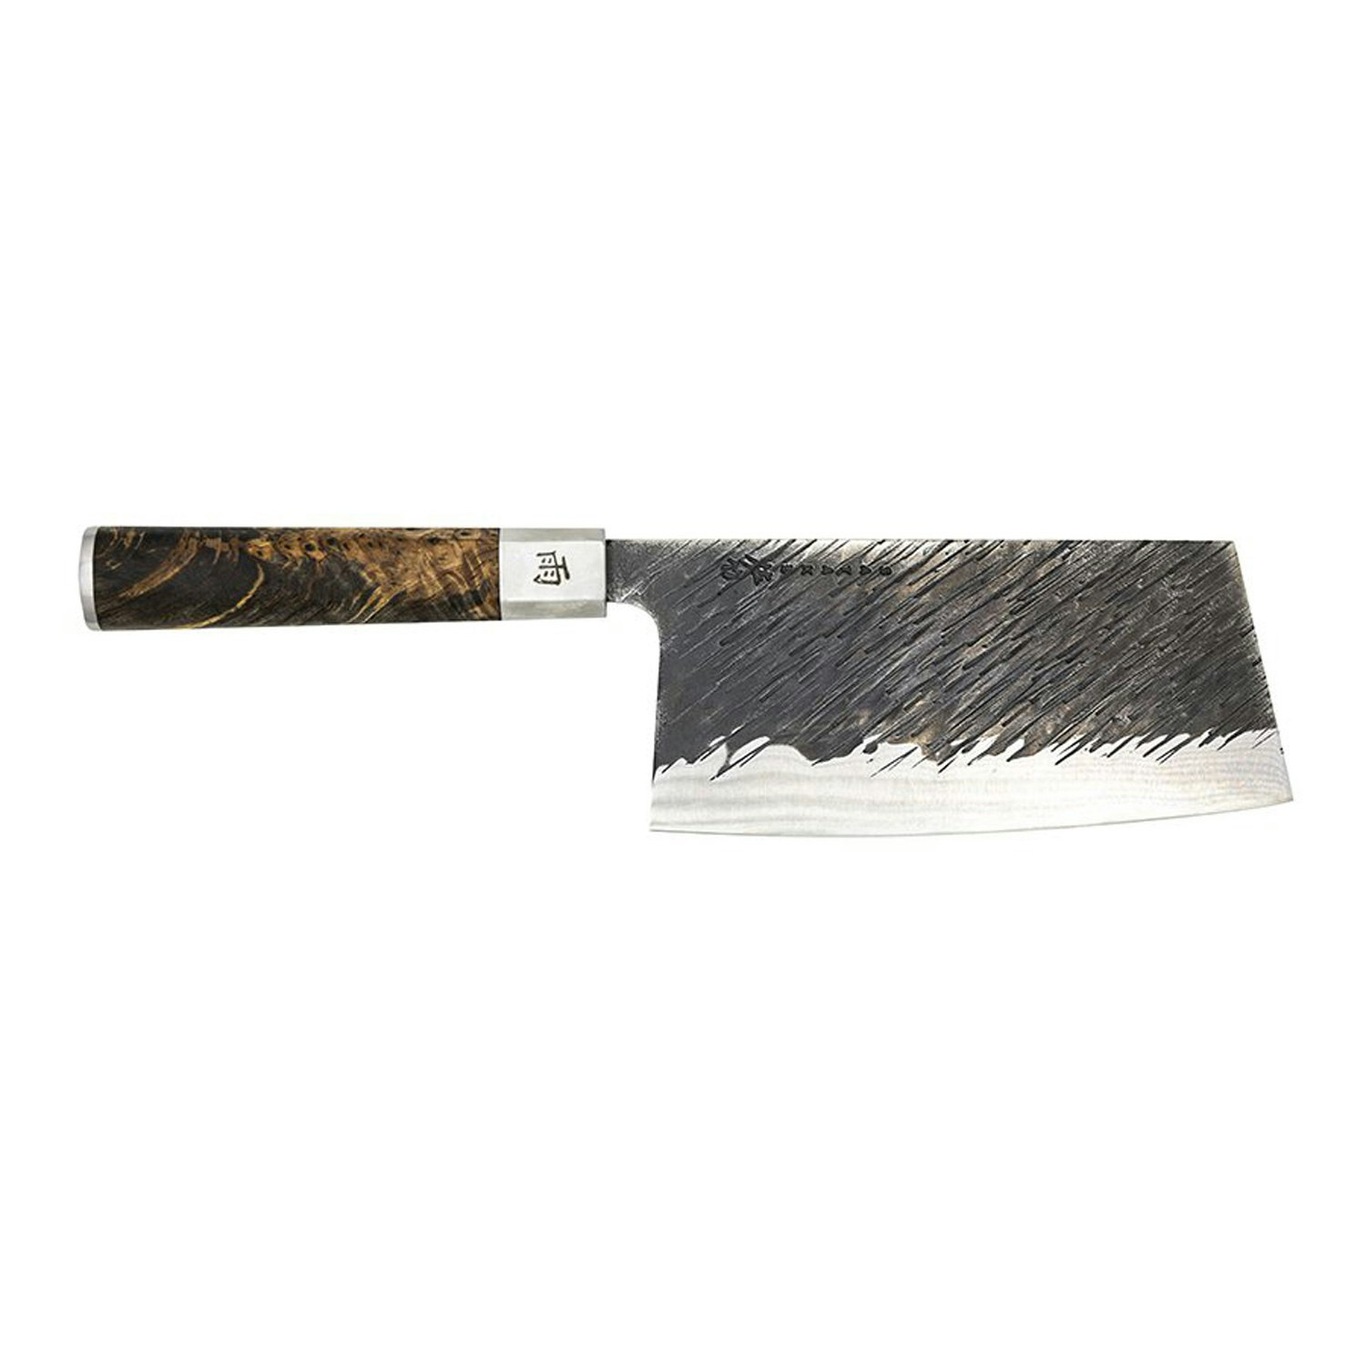 https://royaldesign.com/image/2/satake-ame-chinese-chef-knife-17-cm-0?w=800&quality=80